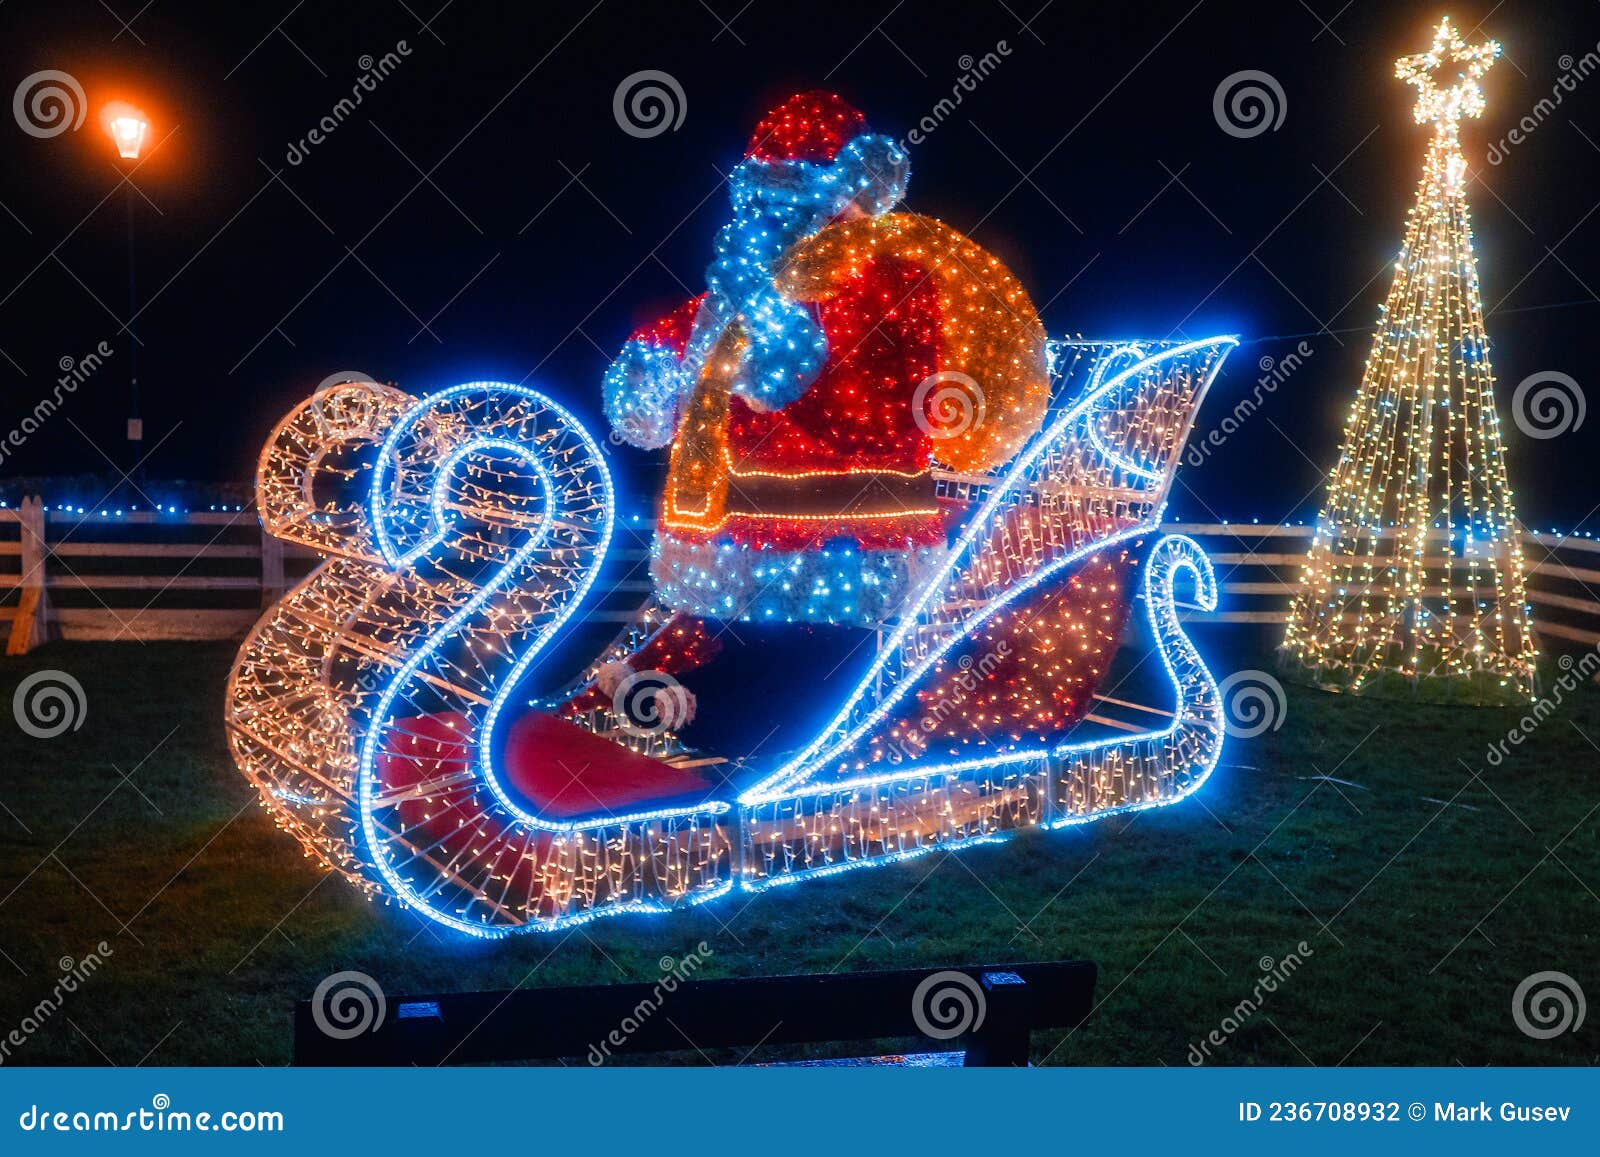 Galway, Ireland - 12.04.2021: Beautiful Illuminated Santa Claus ...